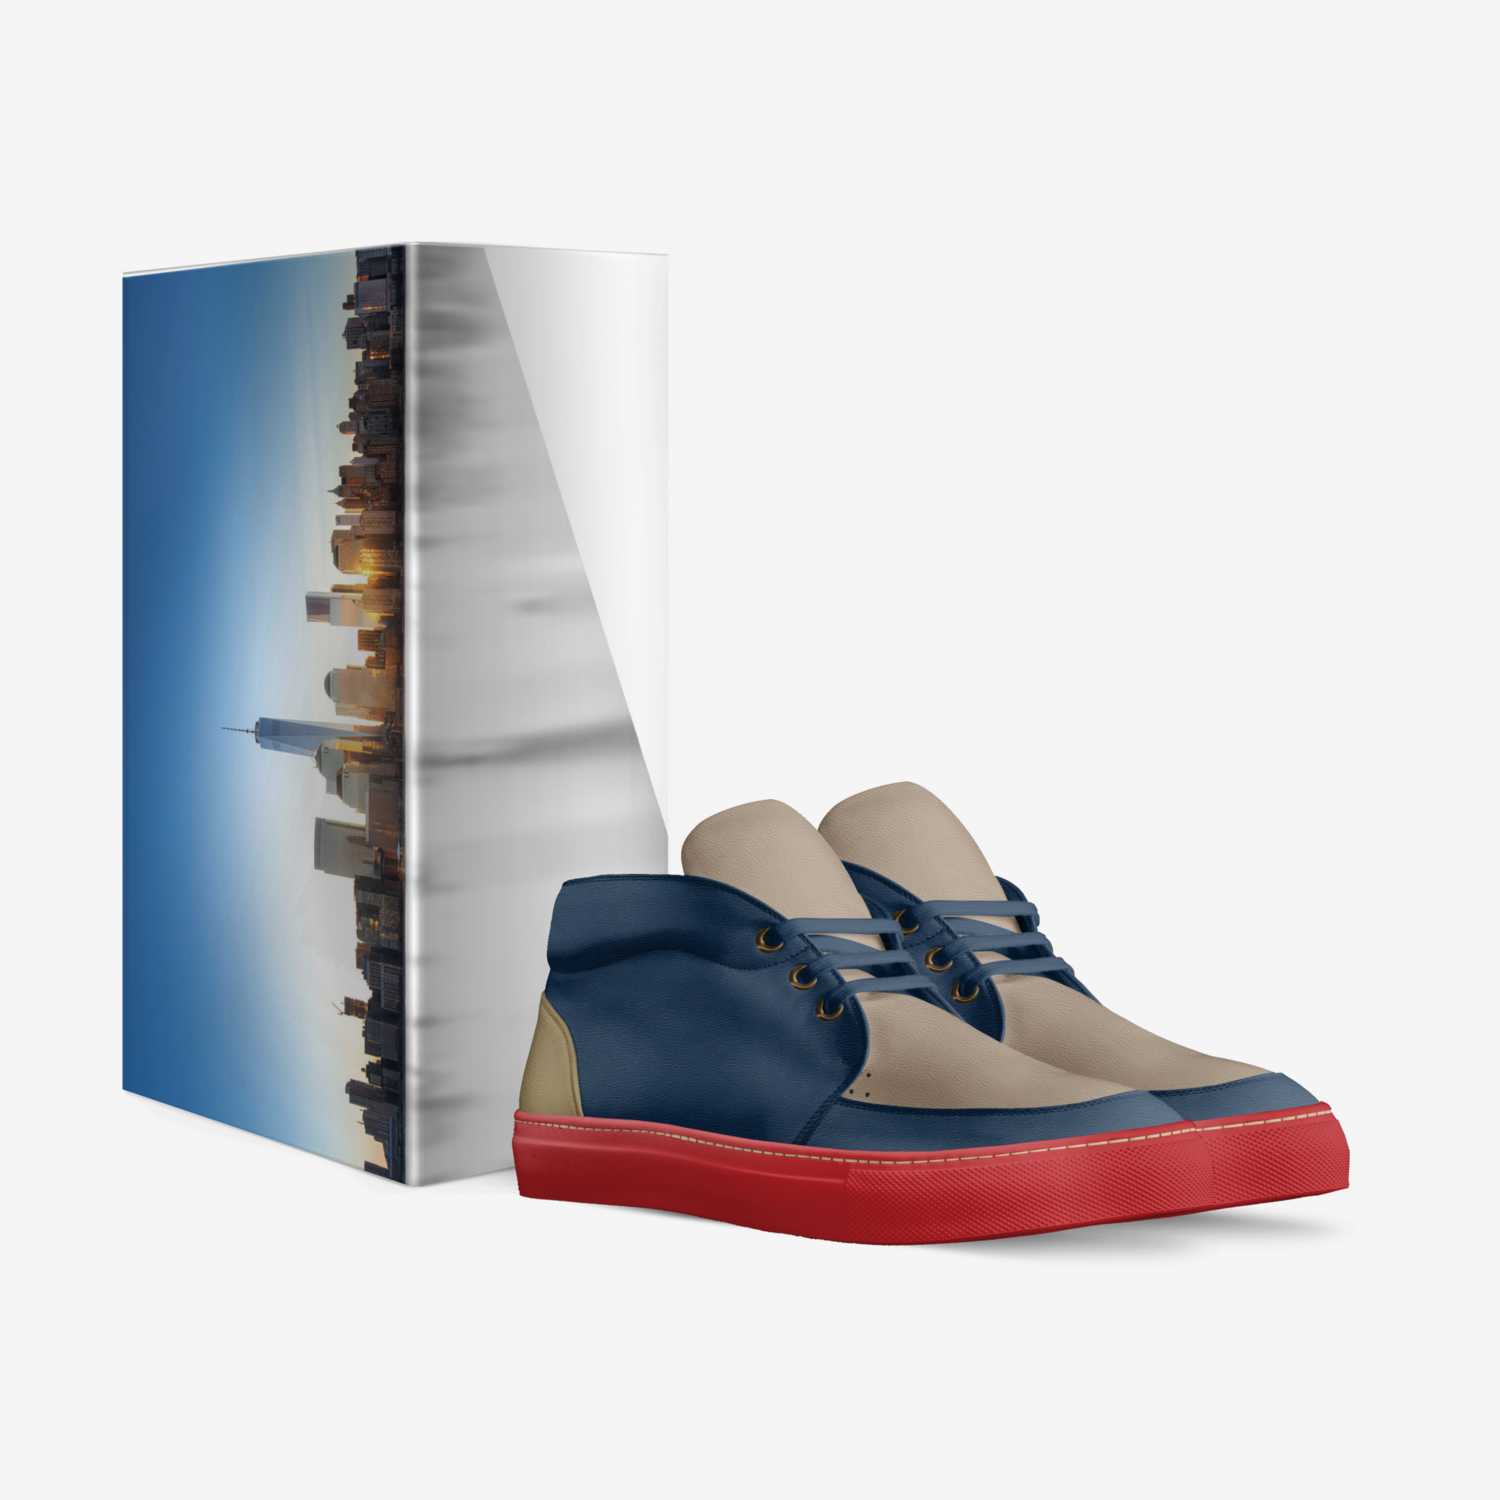 V'ZARRIO  custom made in Italy shoes by Bena Klier | Box view